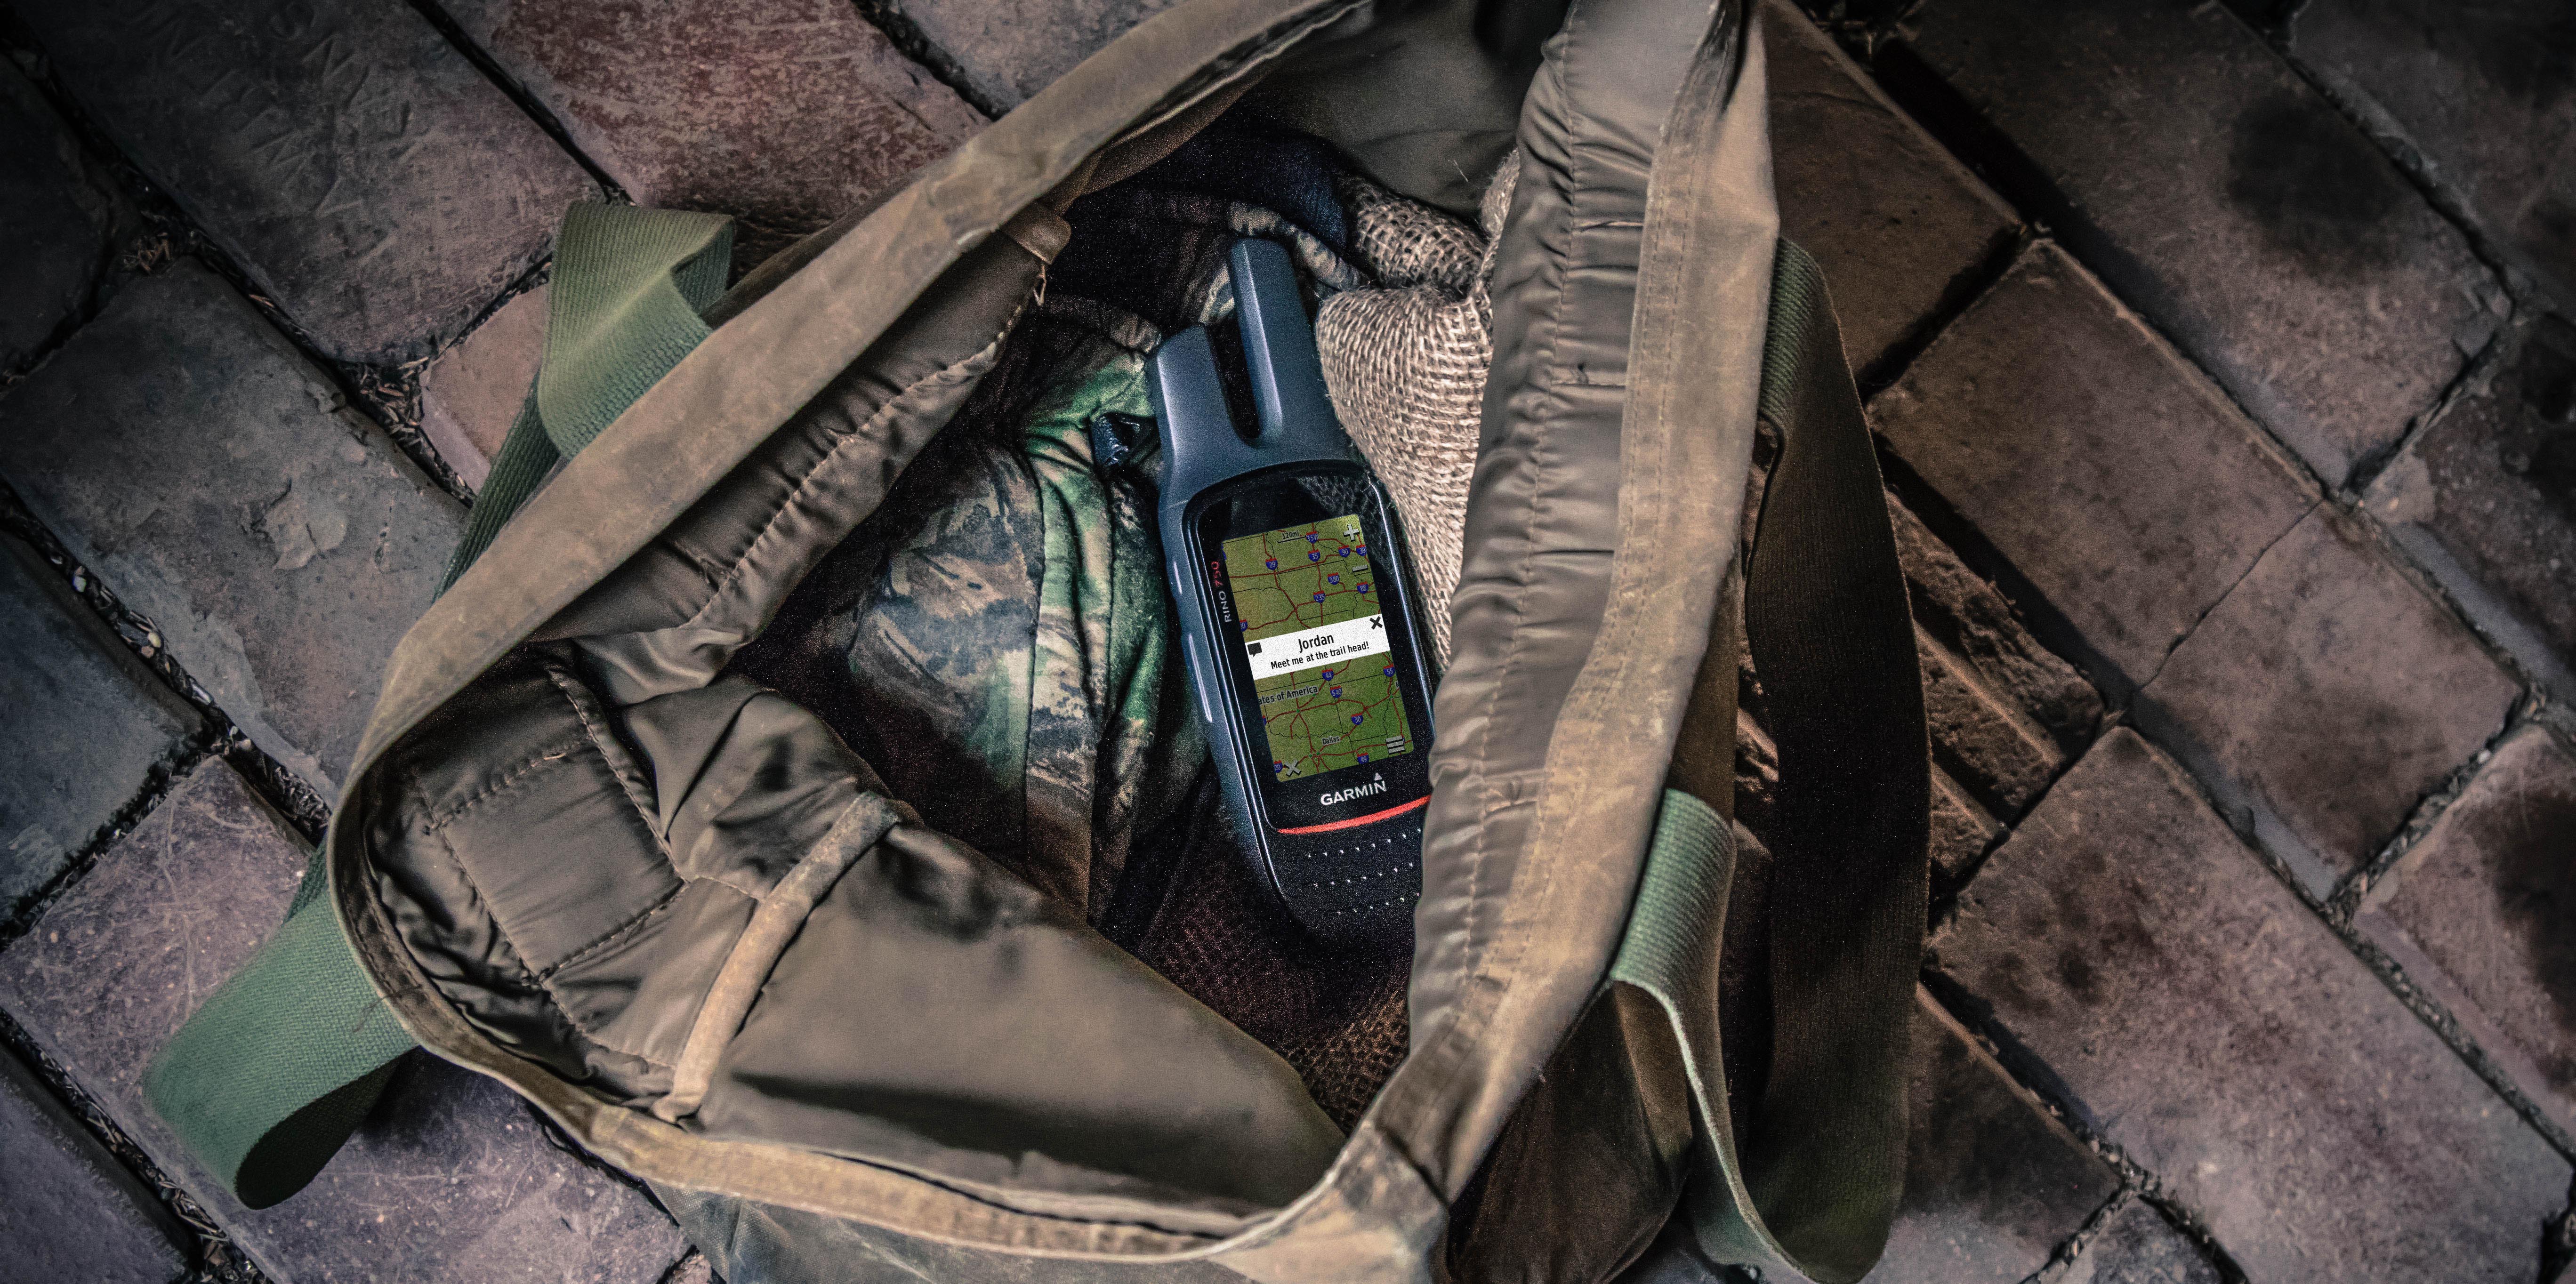 Rino 750 handheld GPS + two-way radio - perfect for hunting and hiking